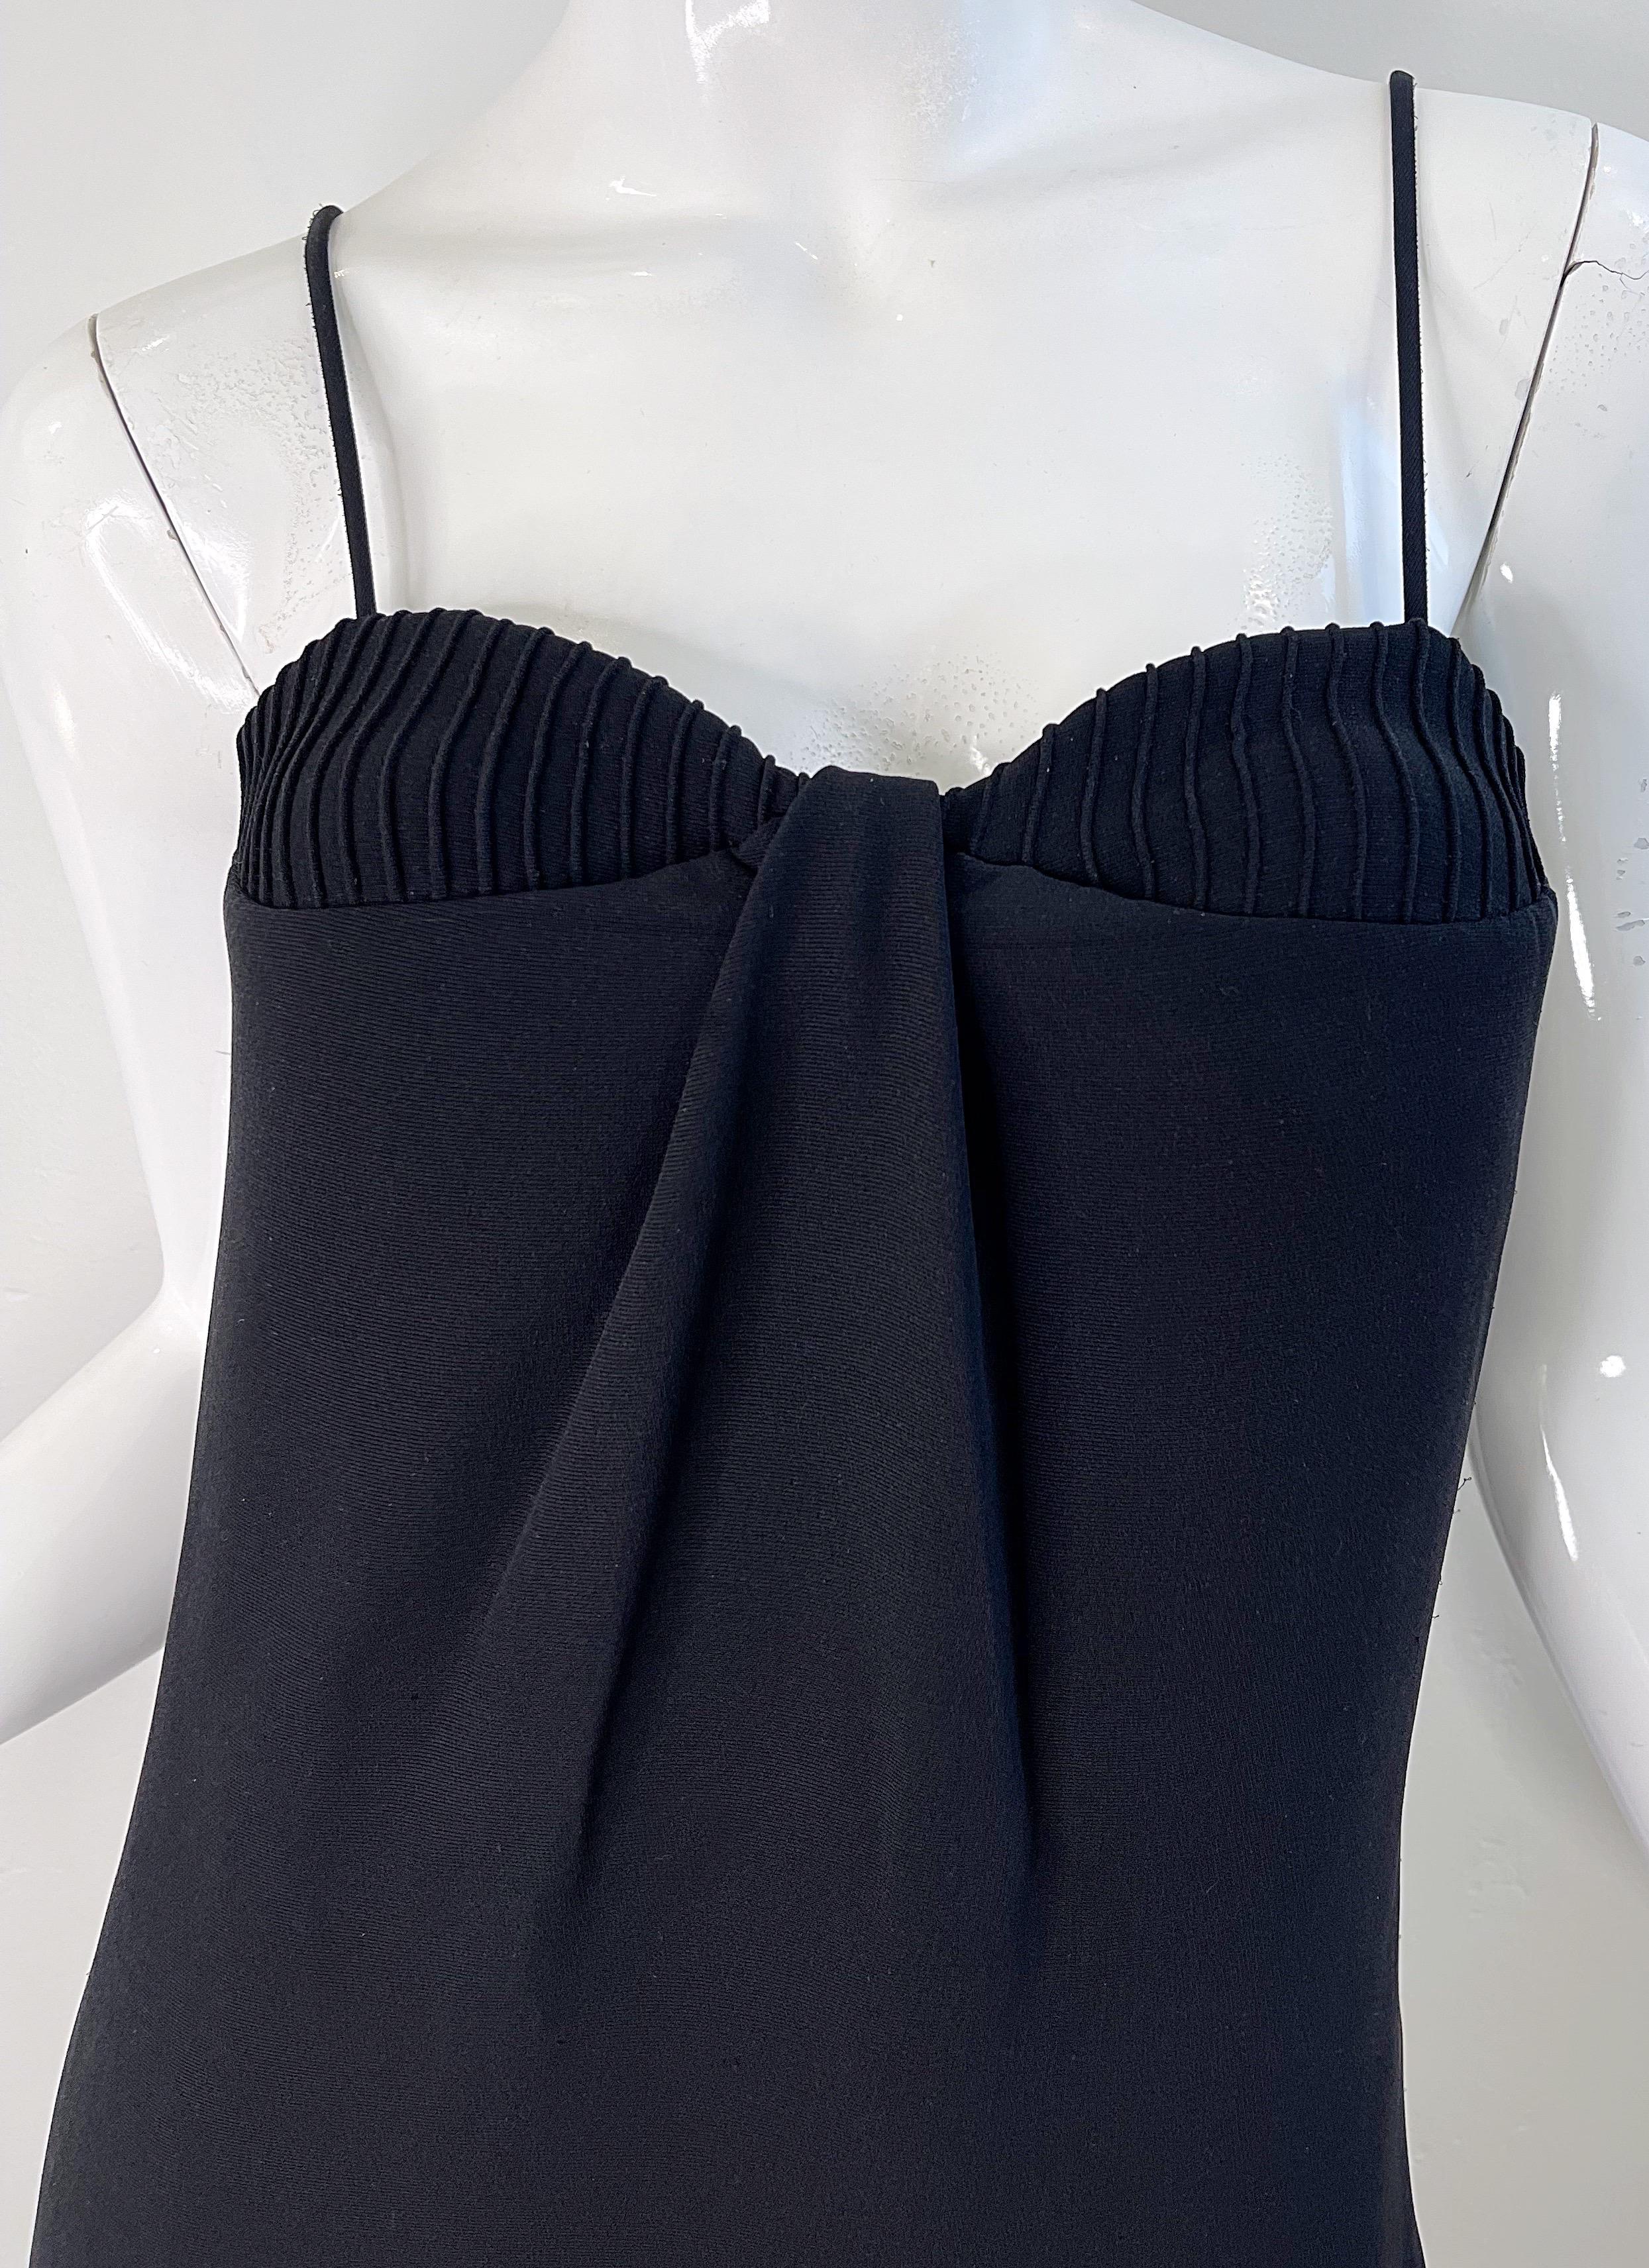 NWT Brandon Maxwell Spring 2018 Runway Size 2 / 4 Black Silk Dress LBD For Sale 1